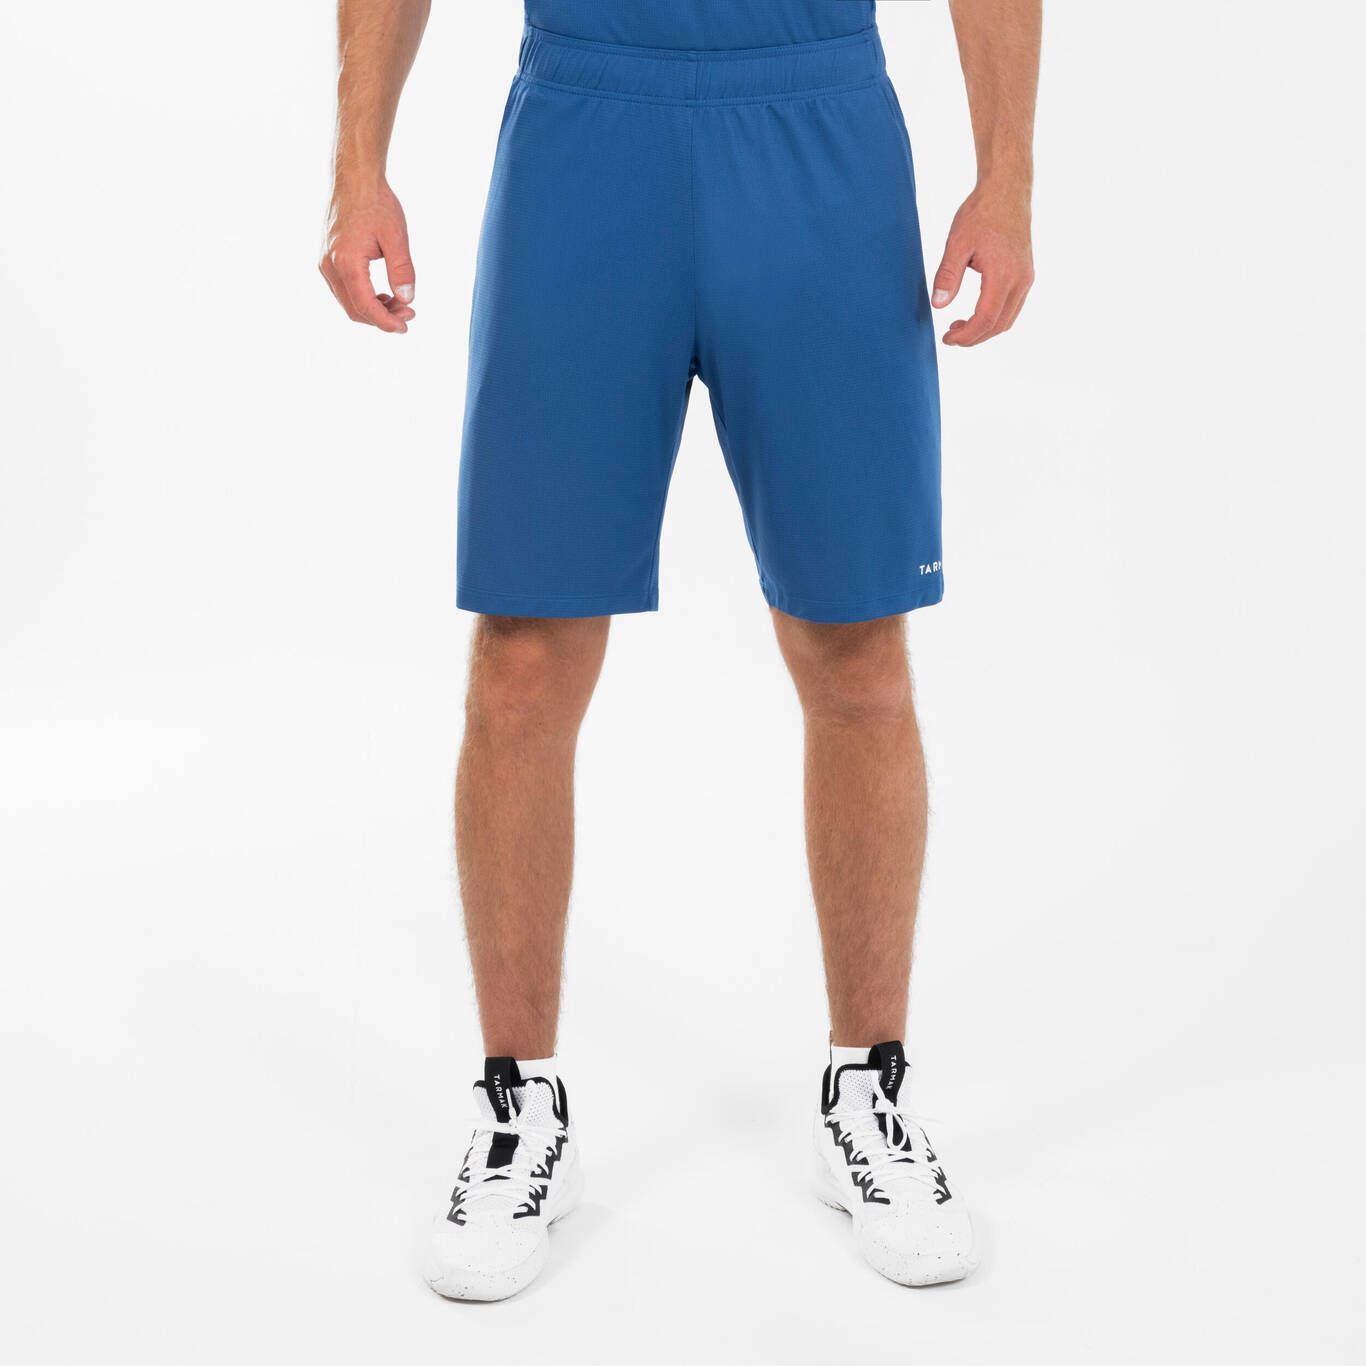 Men's Basketball Shorts SH100 - Blue - Decathlon